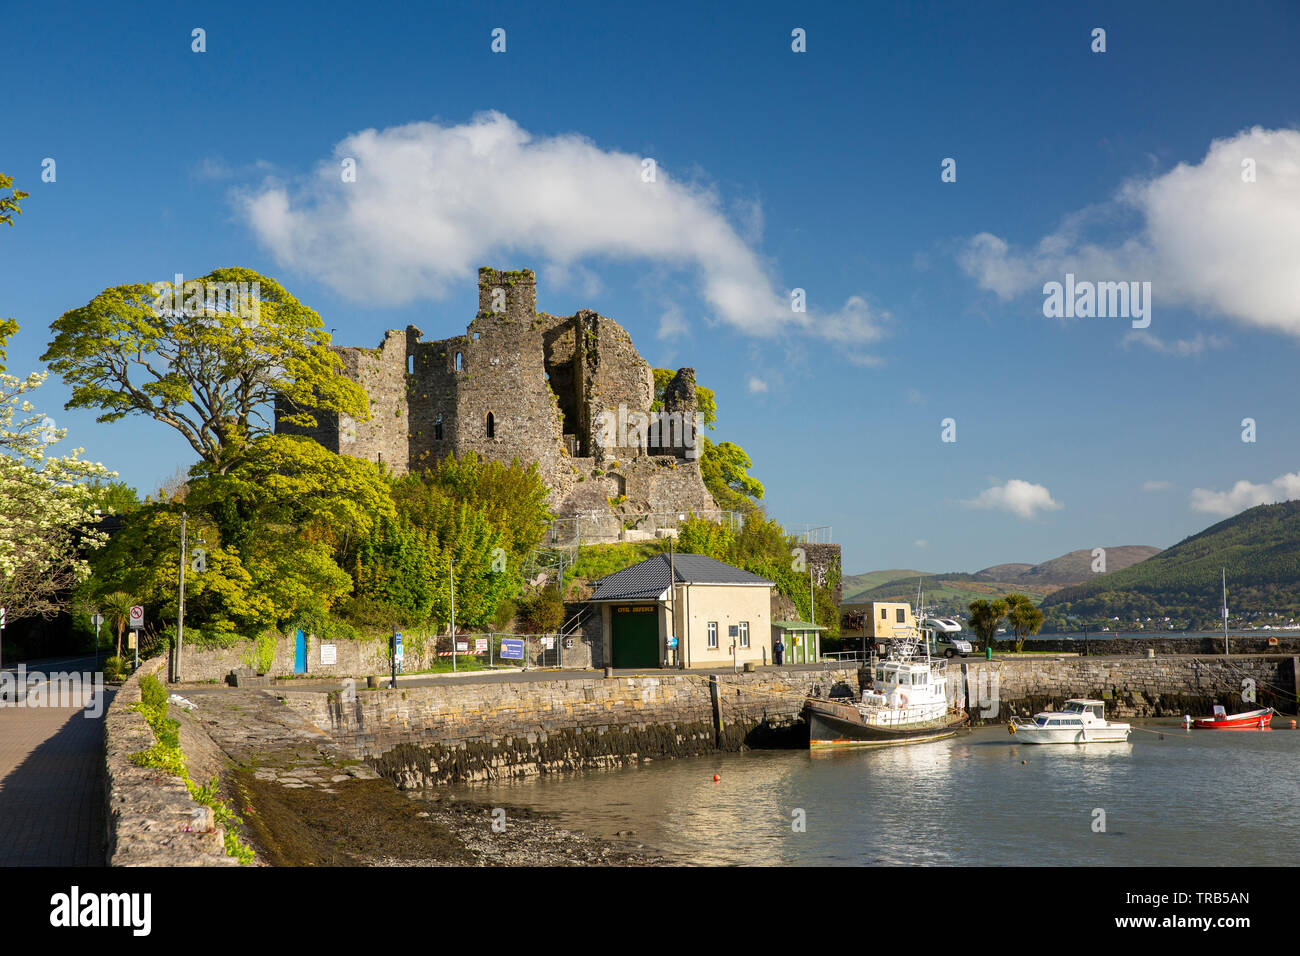 Irlanda, Co Louth, Península Cooley, Carlingford, St John's Castle, ruina medieval sobre el puerto Foto de stock